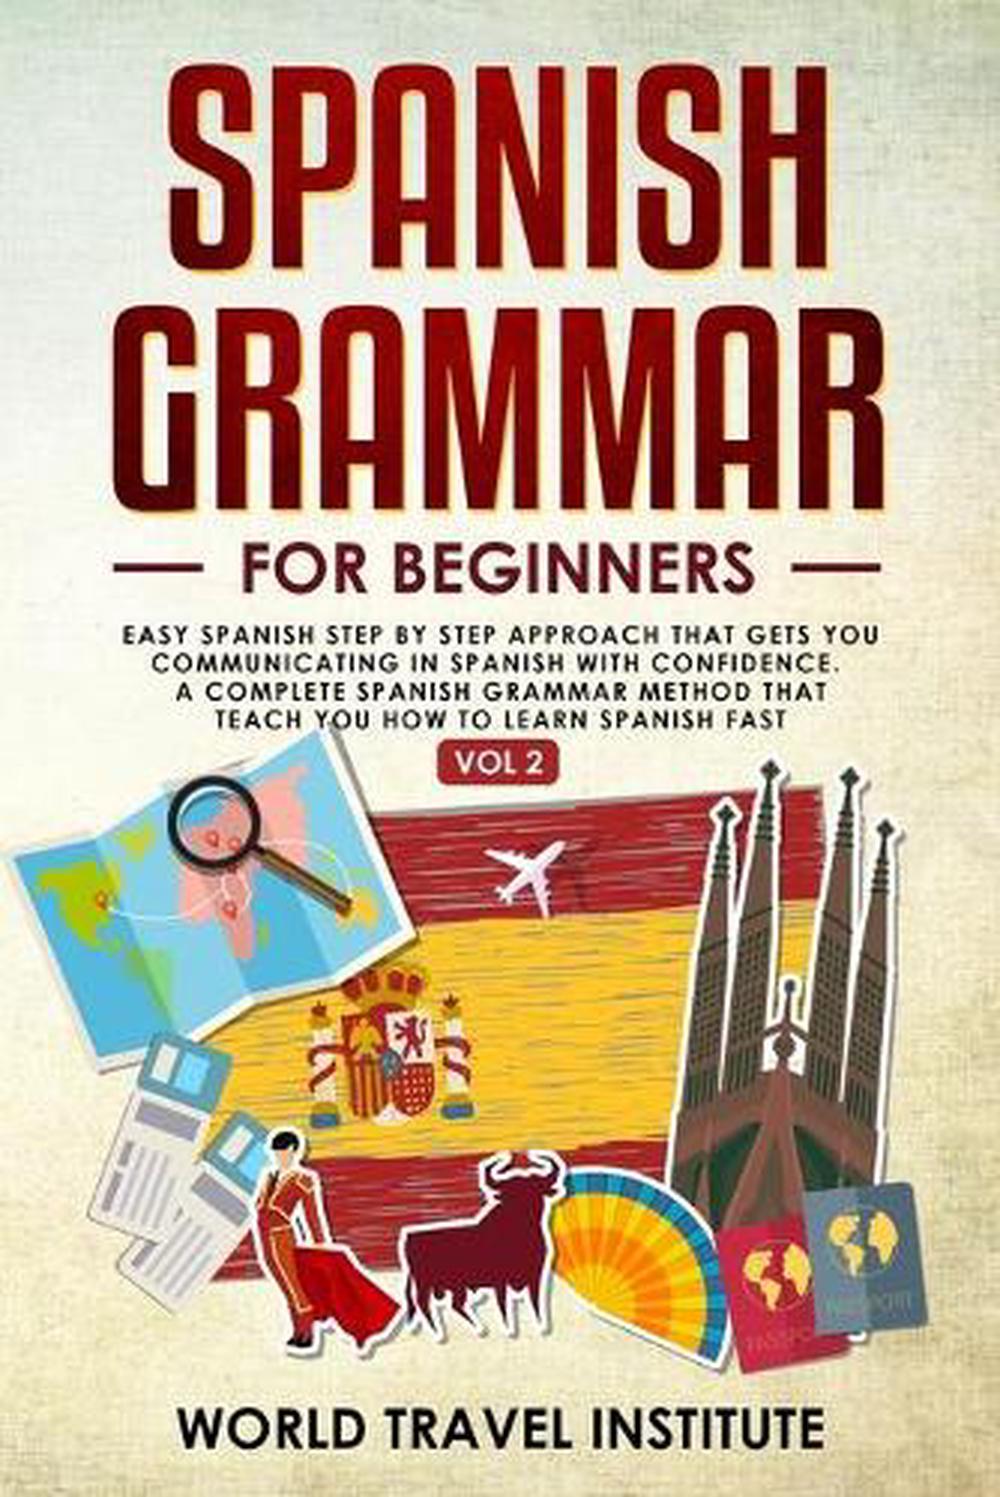 Spanish Grammar for Beginners Vol.2 by World Travel Institute Free ...